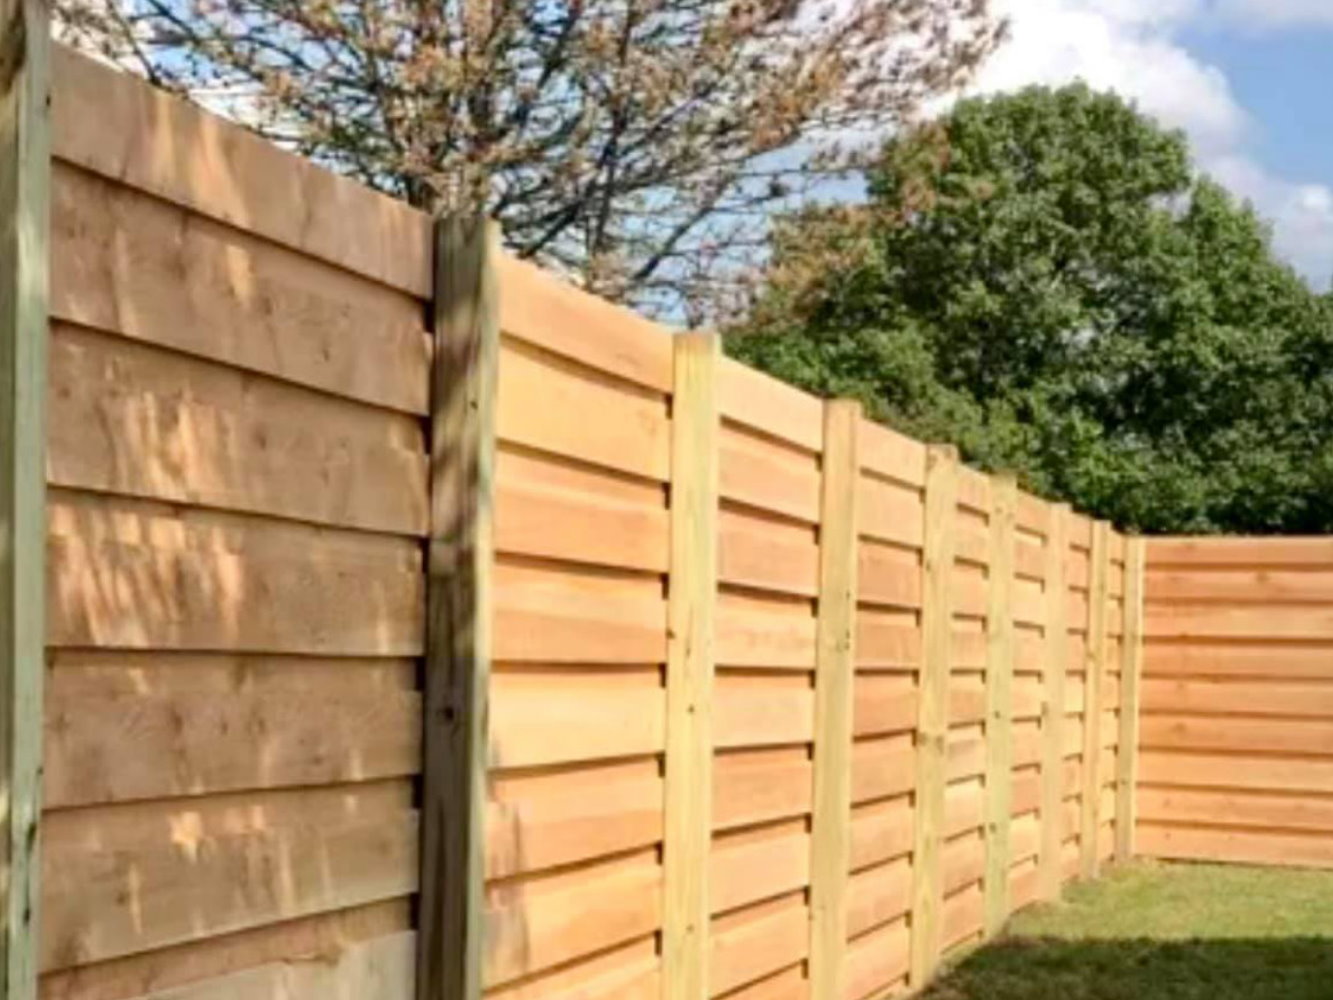 Henderson KY horizontal style wood fence